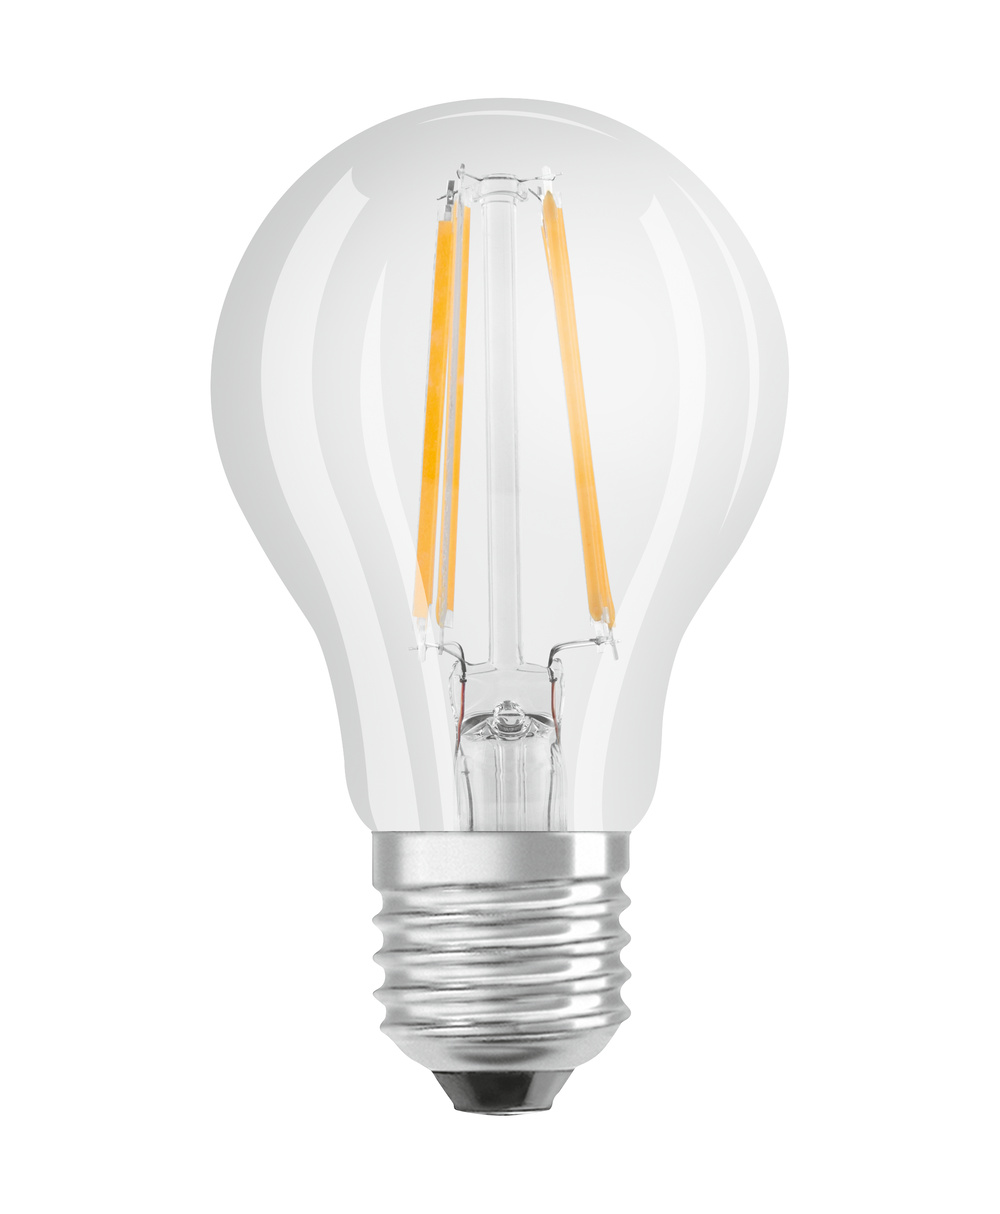 Ledvance LED lamp LED CLASSIC A DIM P 7W 827 FIL CL E27 – 4099854054396 – replacement for 60 W - 4099854054396